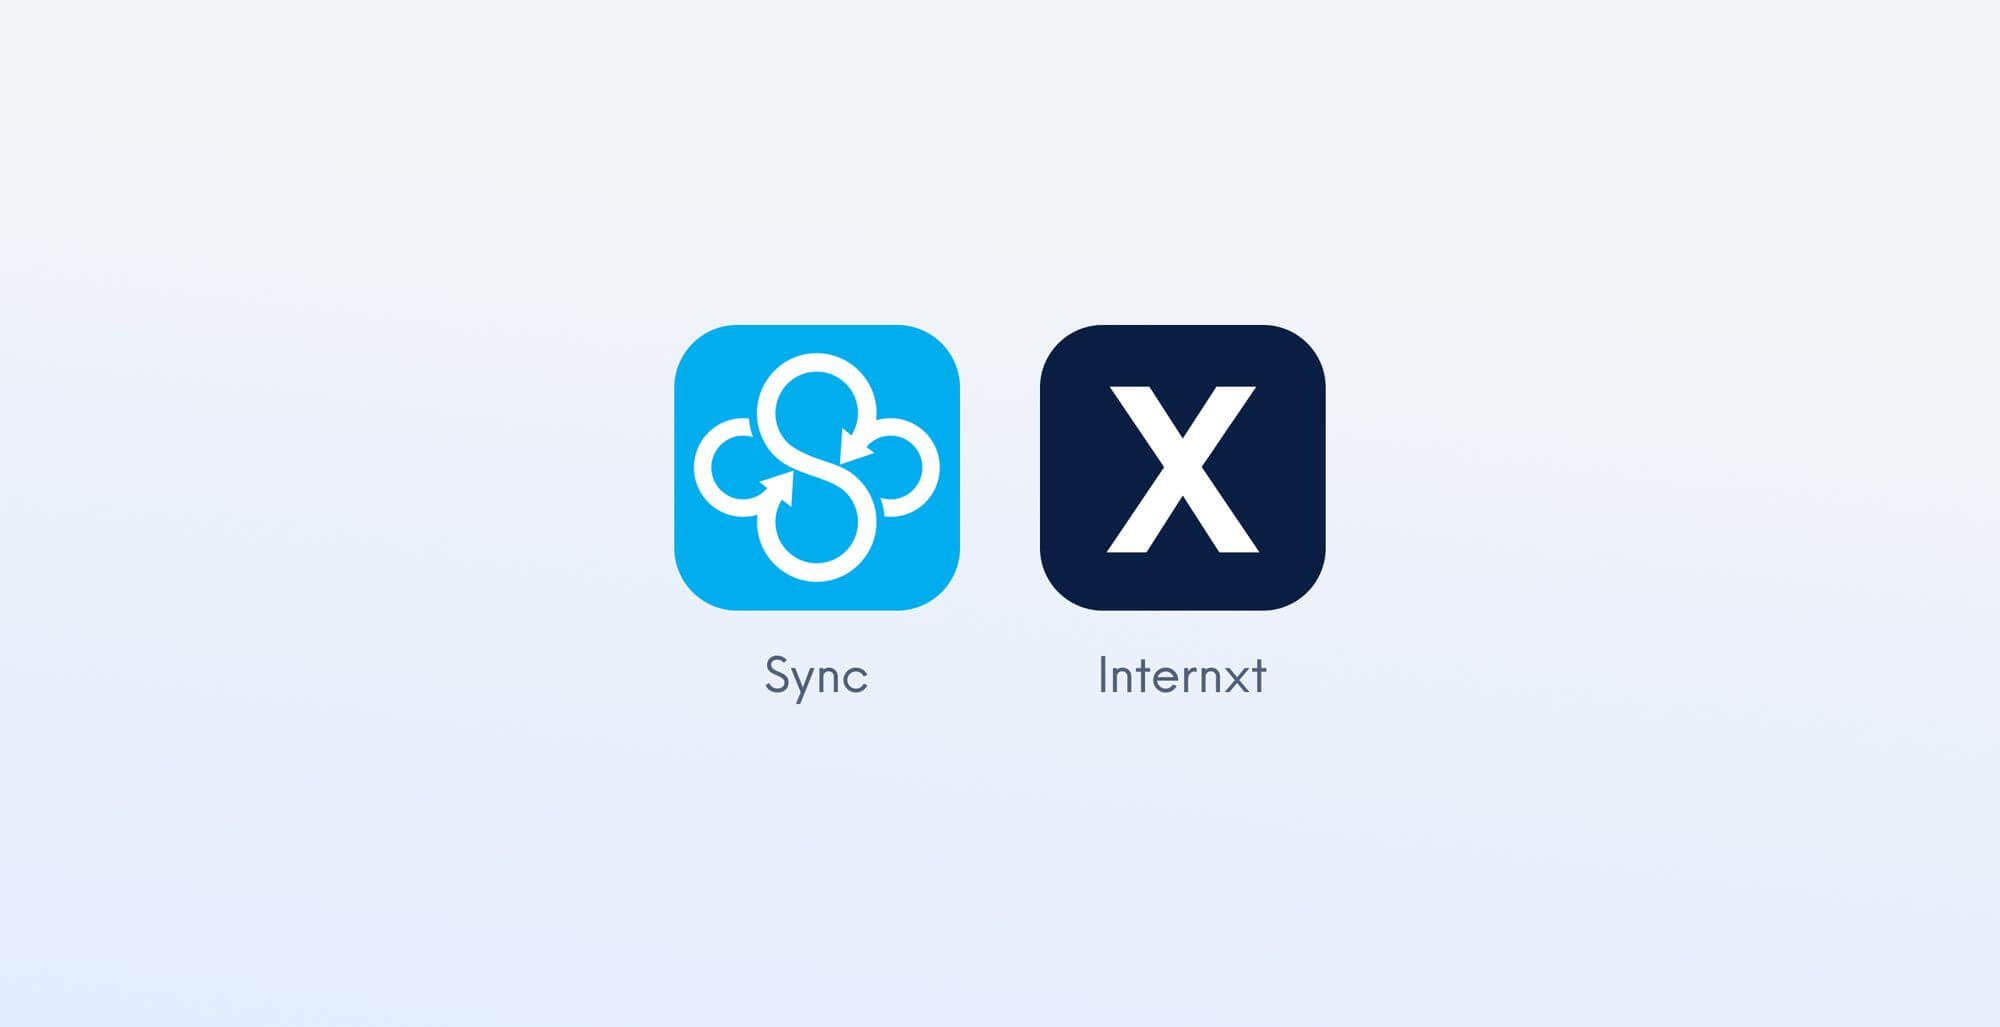 Internxt logo and Sync logo